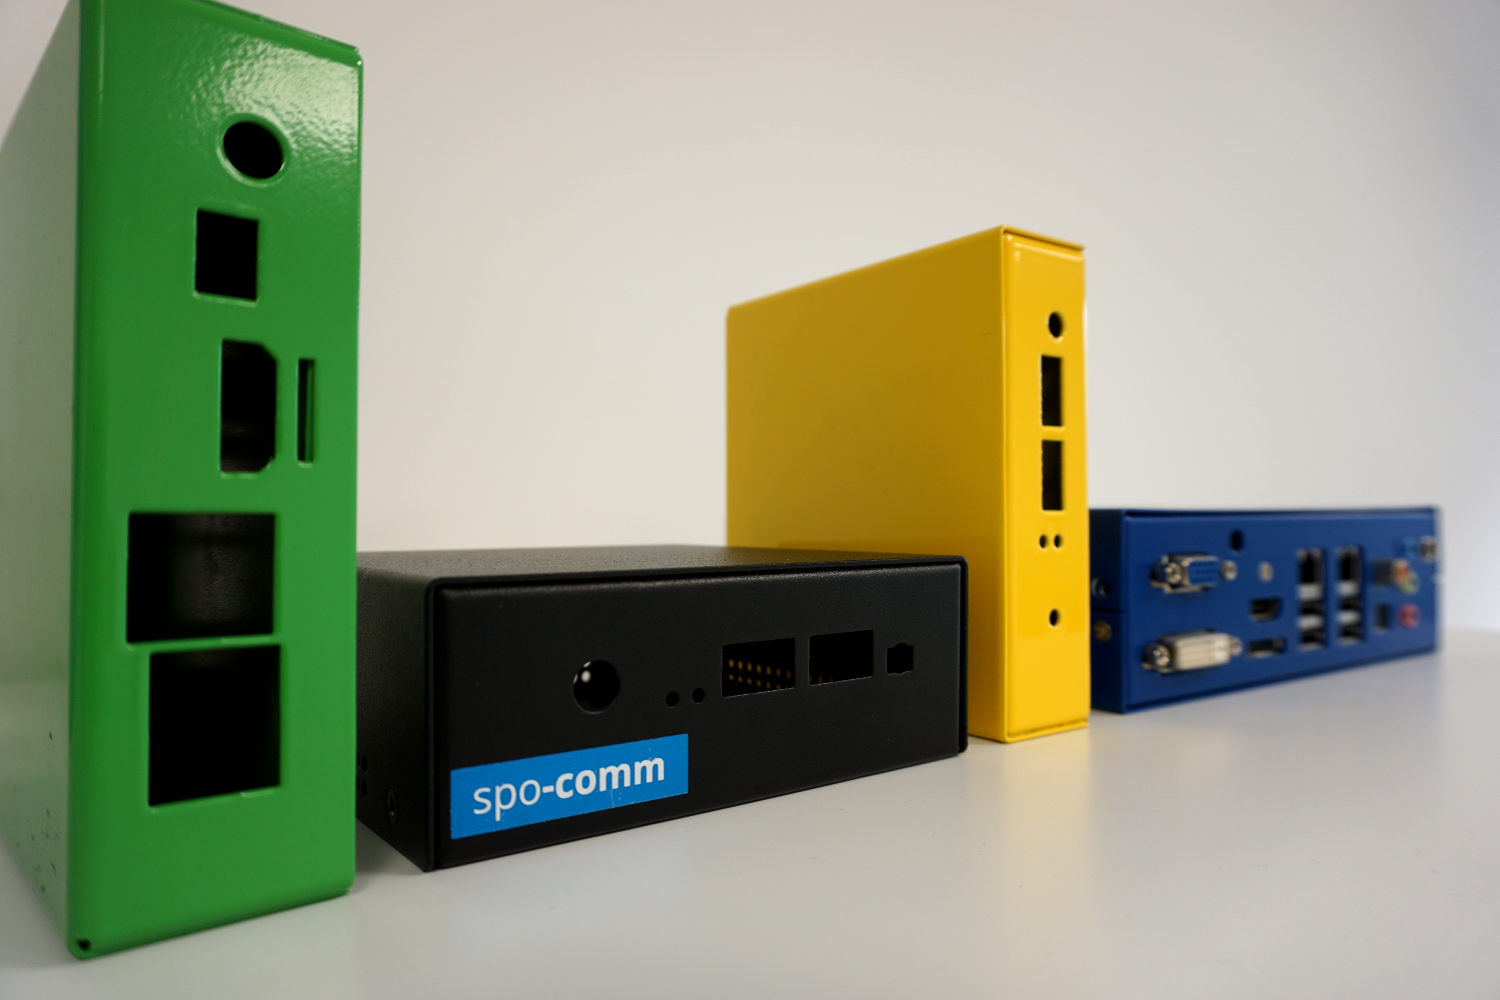 Customizing by spo-comm – Your individually designed Mini-PC